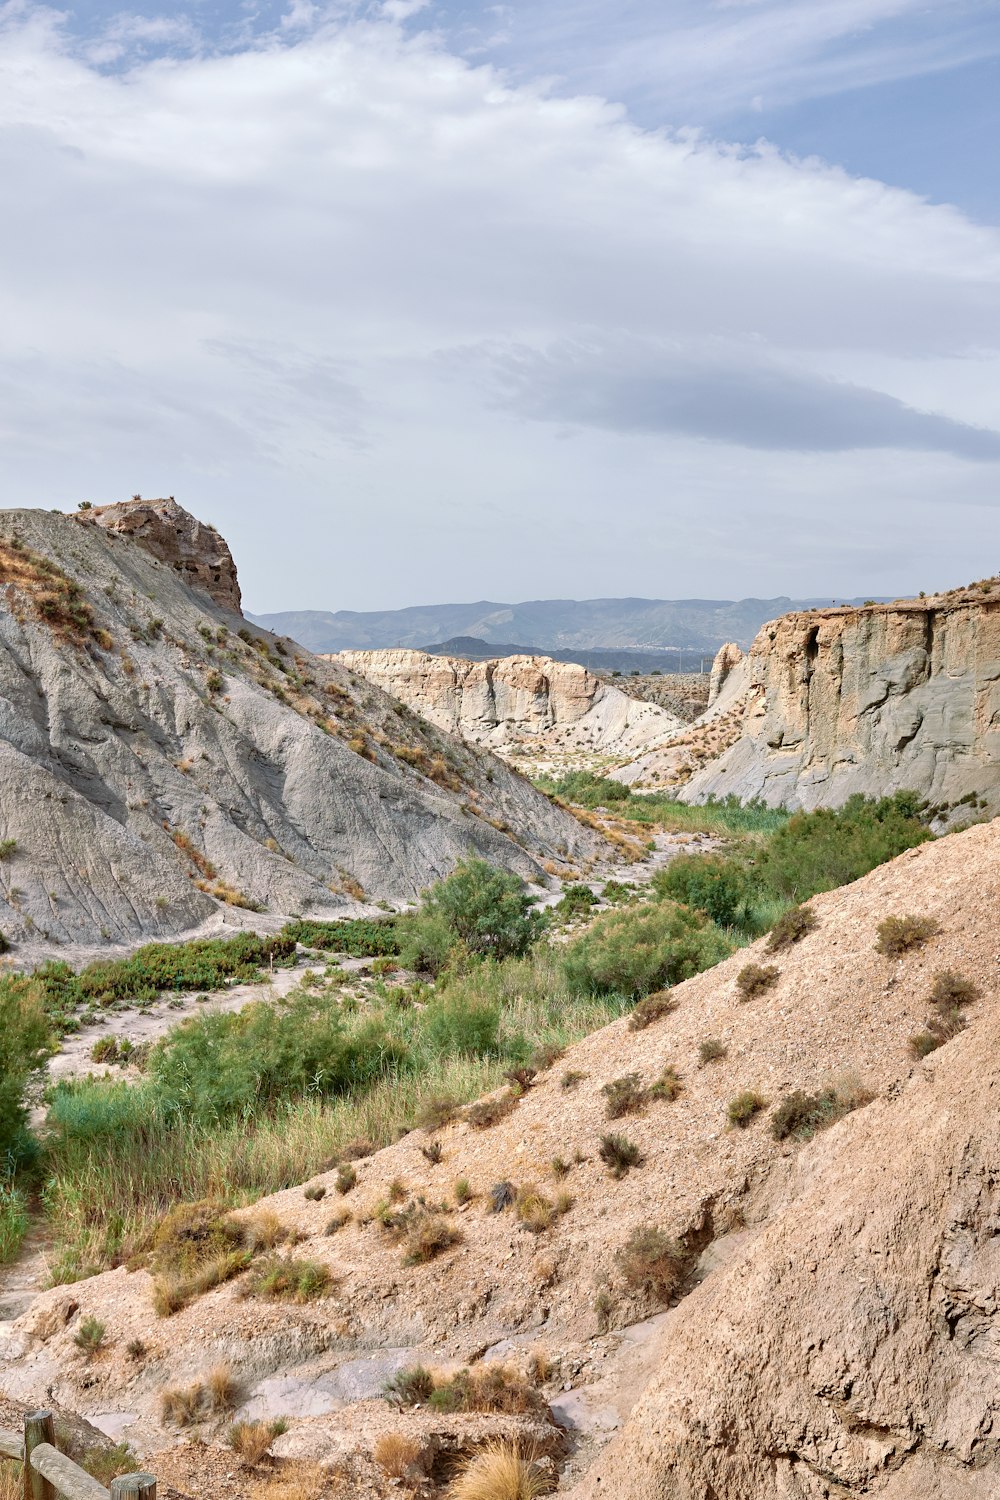 Un canyon rocheux avec une vallée en contrebas